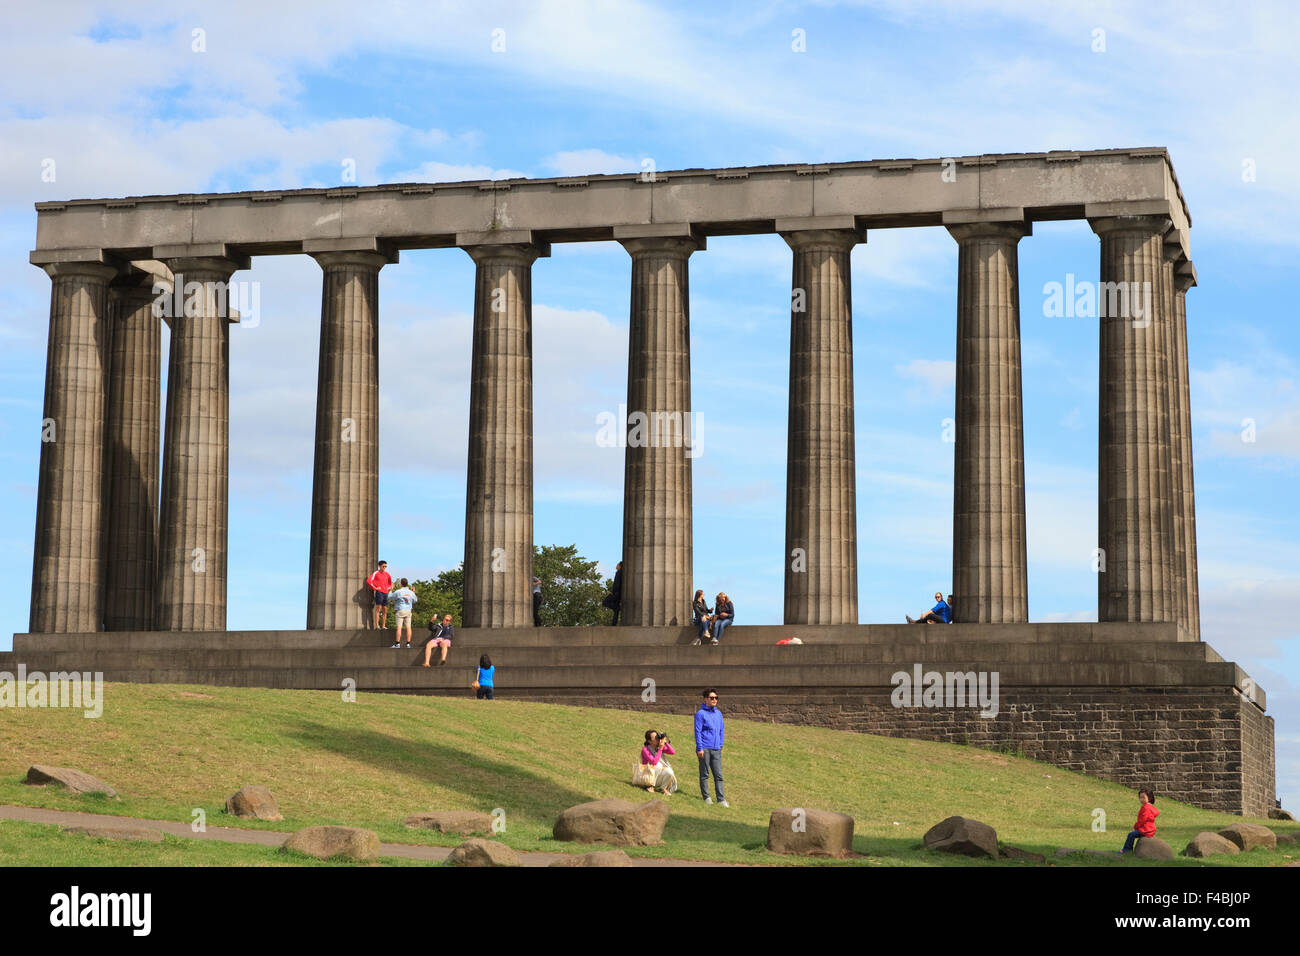 The National Monument of Scotland, on Calton Hill in Edinburgh. Stock Photo